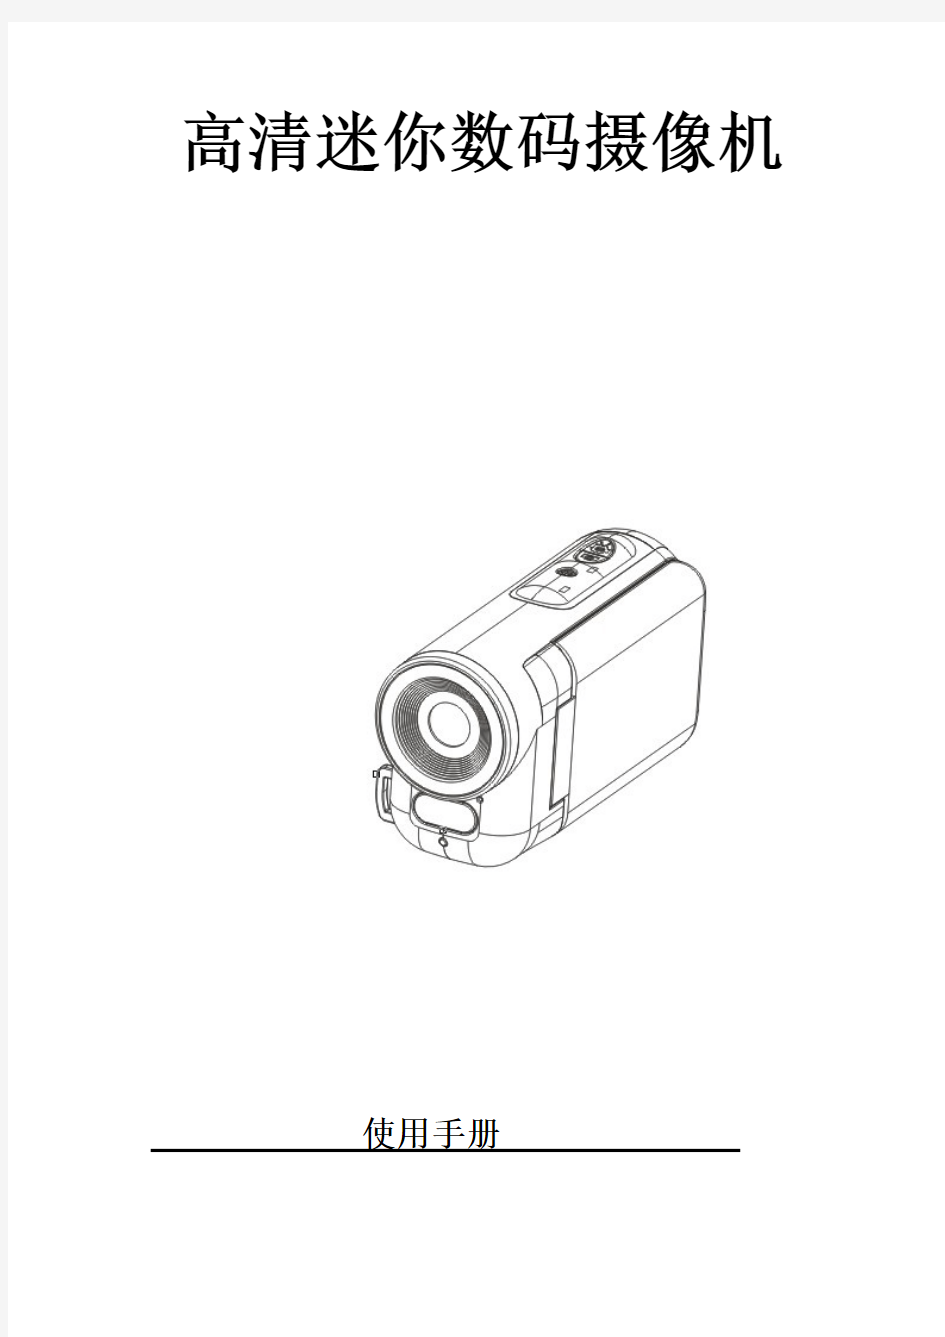 high definition mini 数码摄像机digital video 摄像机手册camera Manual说明书